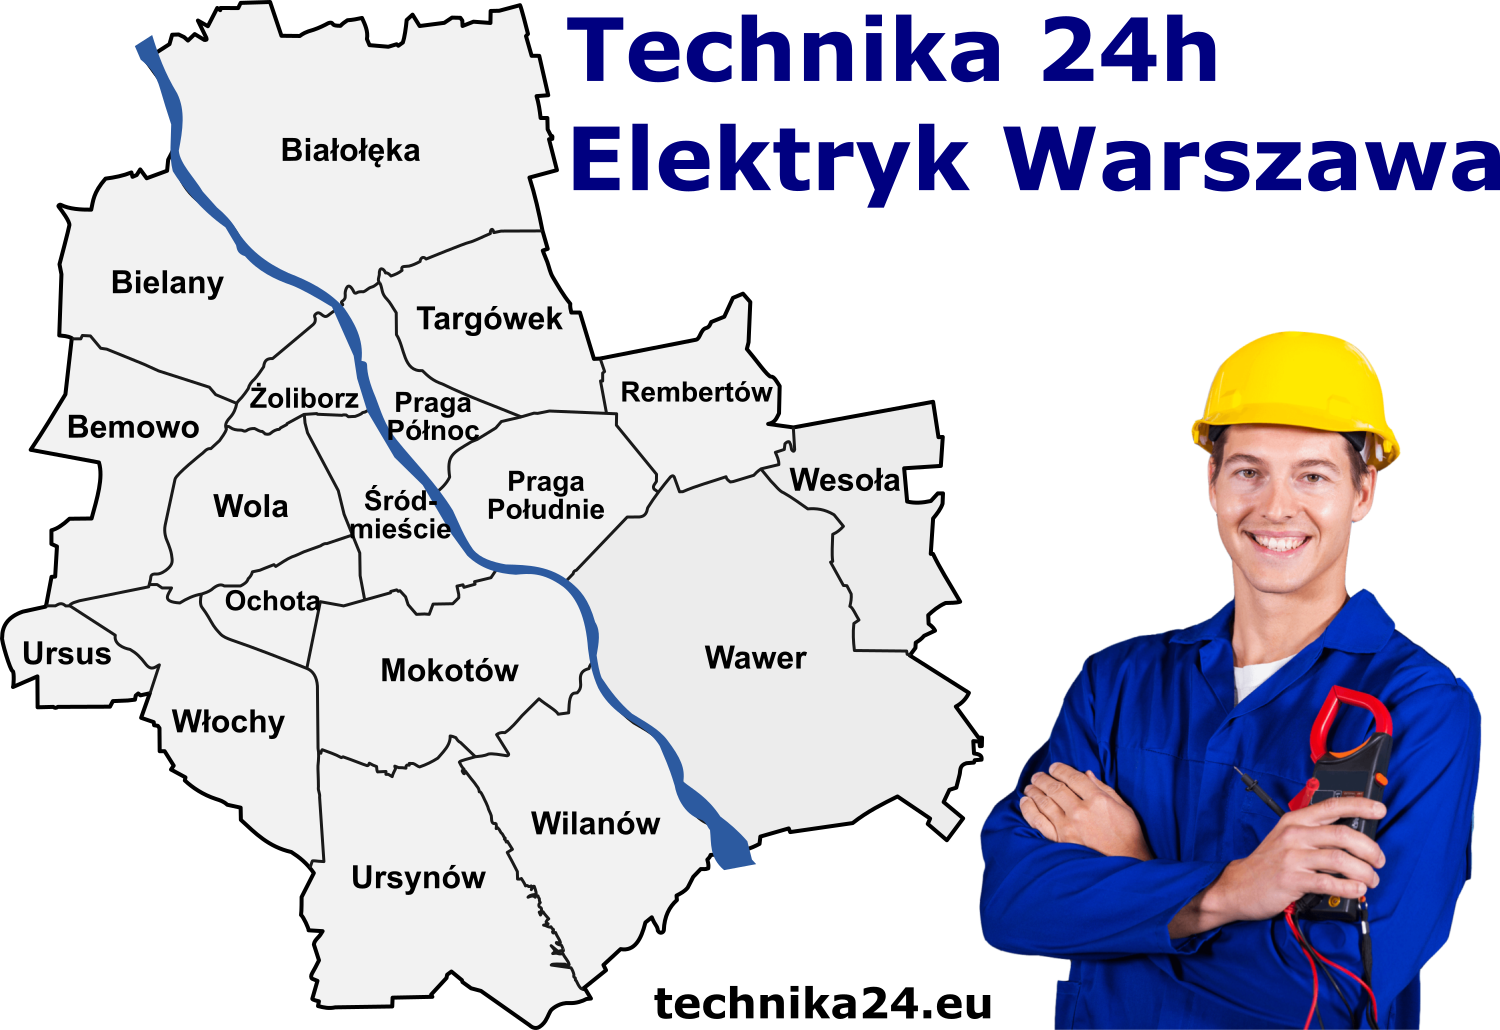 Technika 24h - Elektryk Warszawa